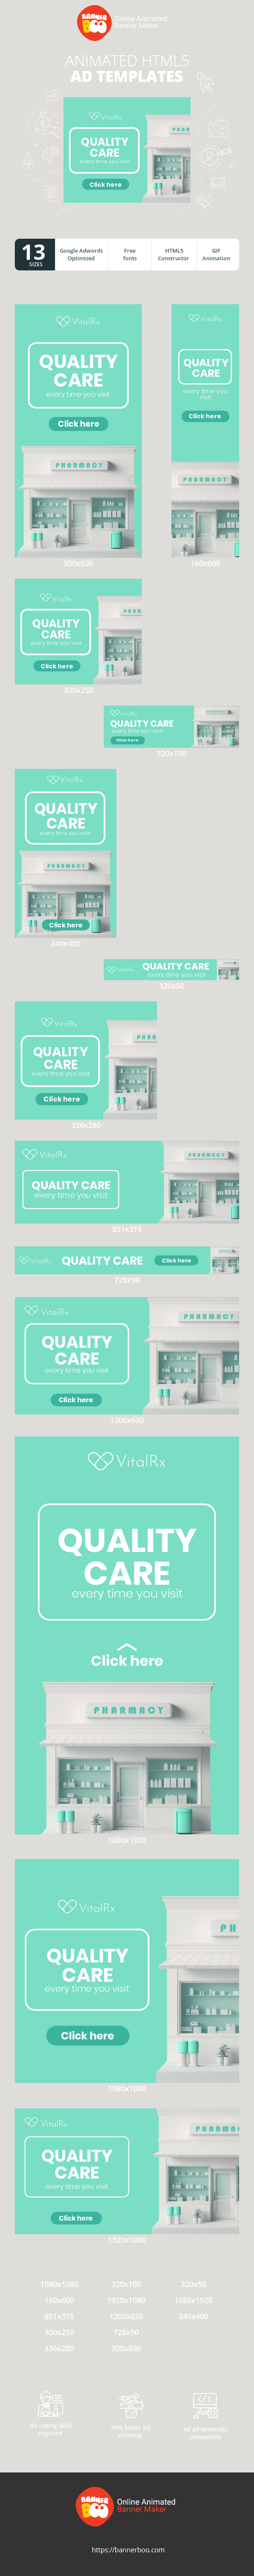 Szablon reklamy banerowej — Quality Care — Every Time You Visit